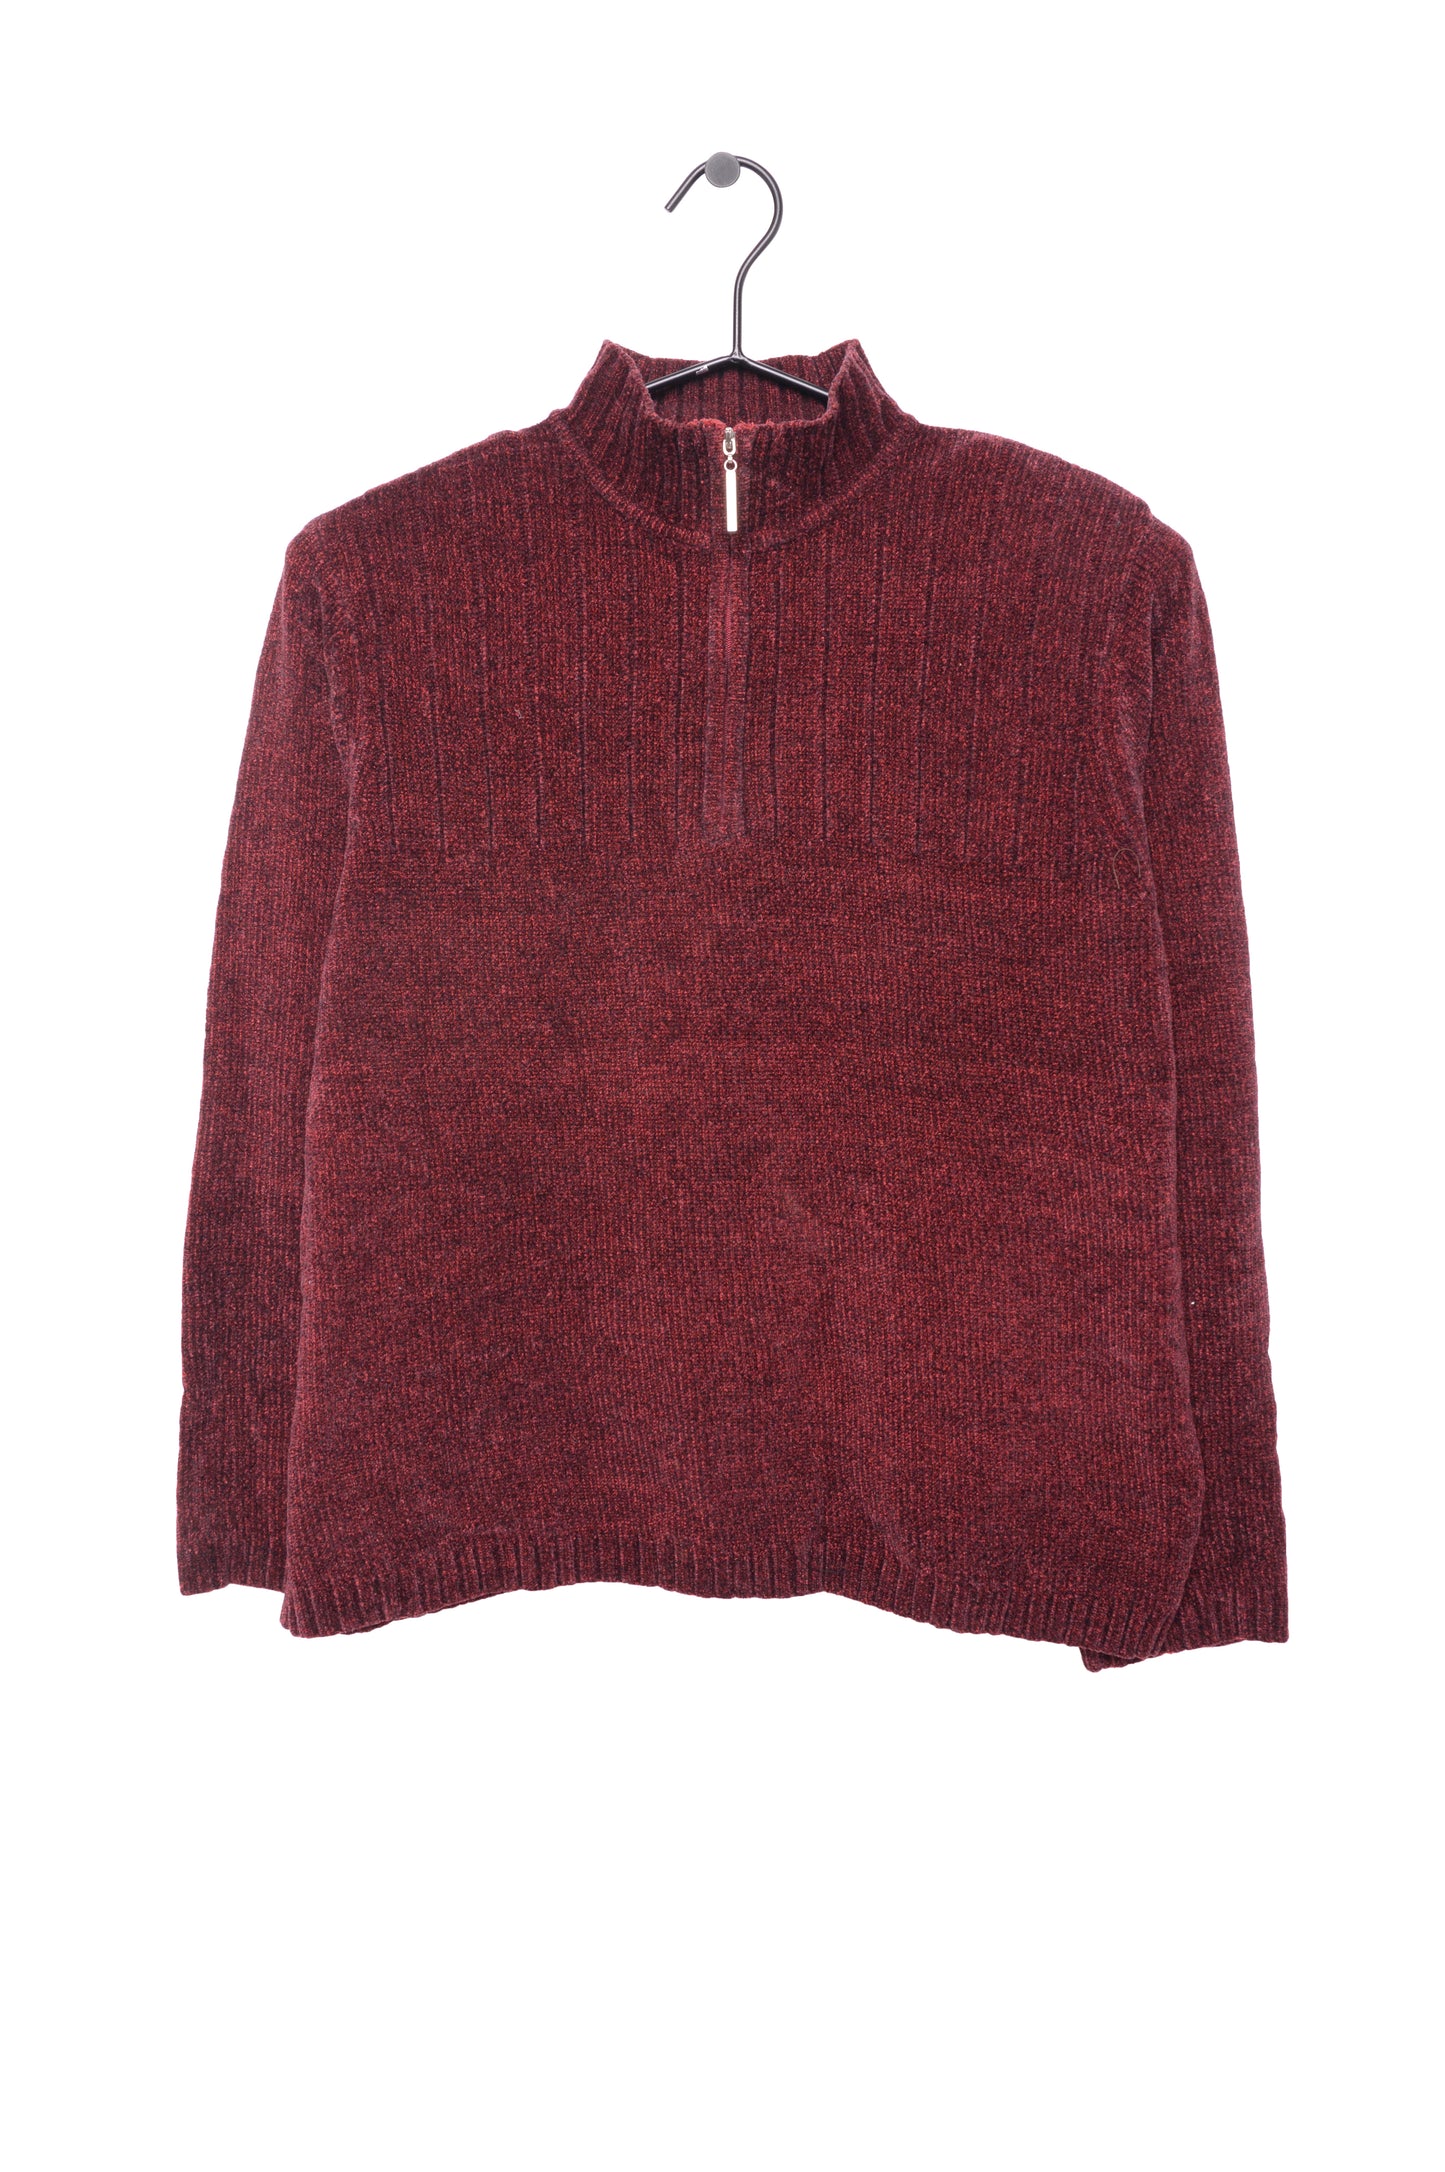 Half-Zip Chenille Sweater